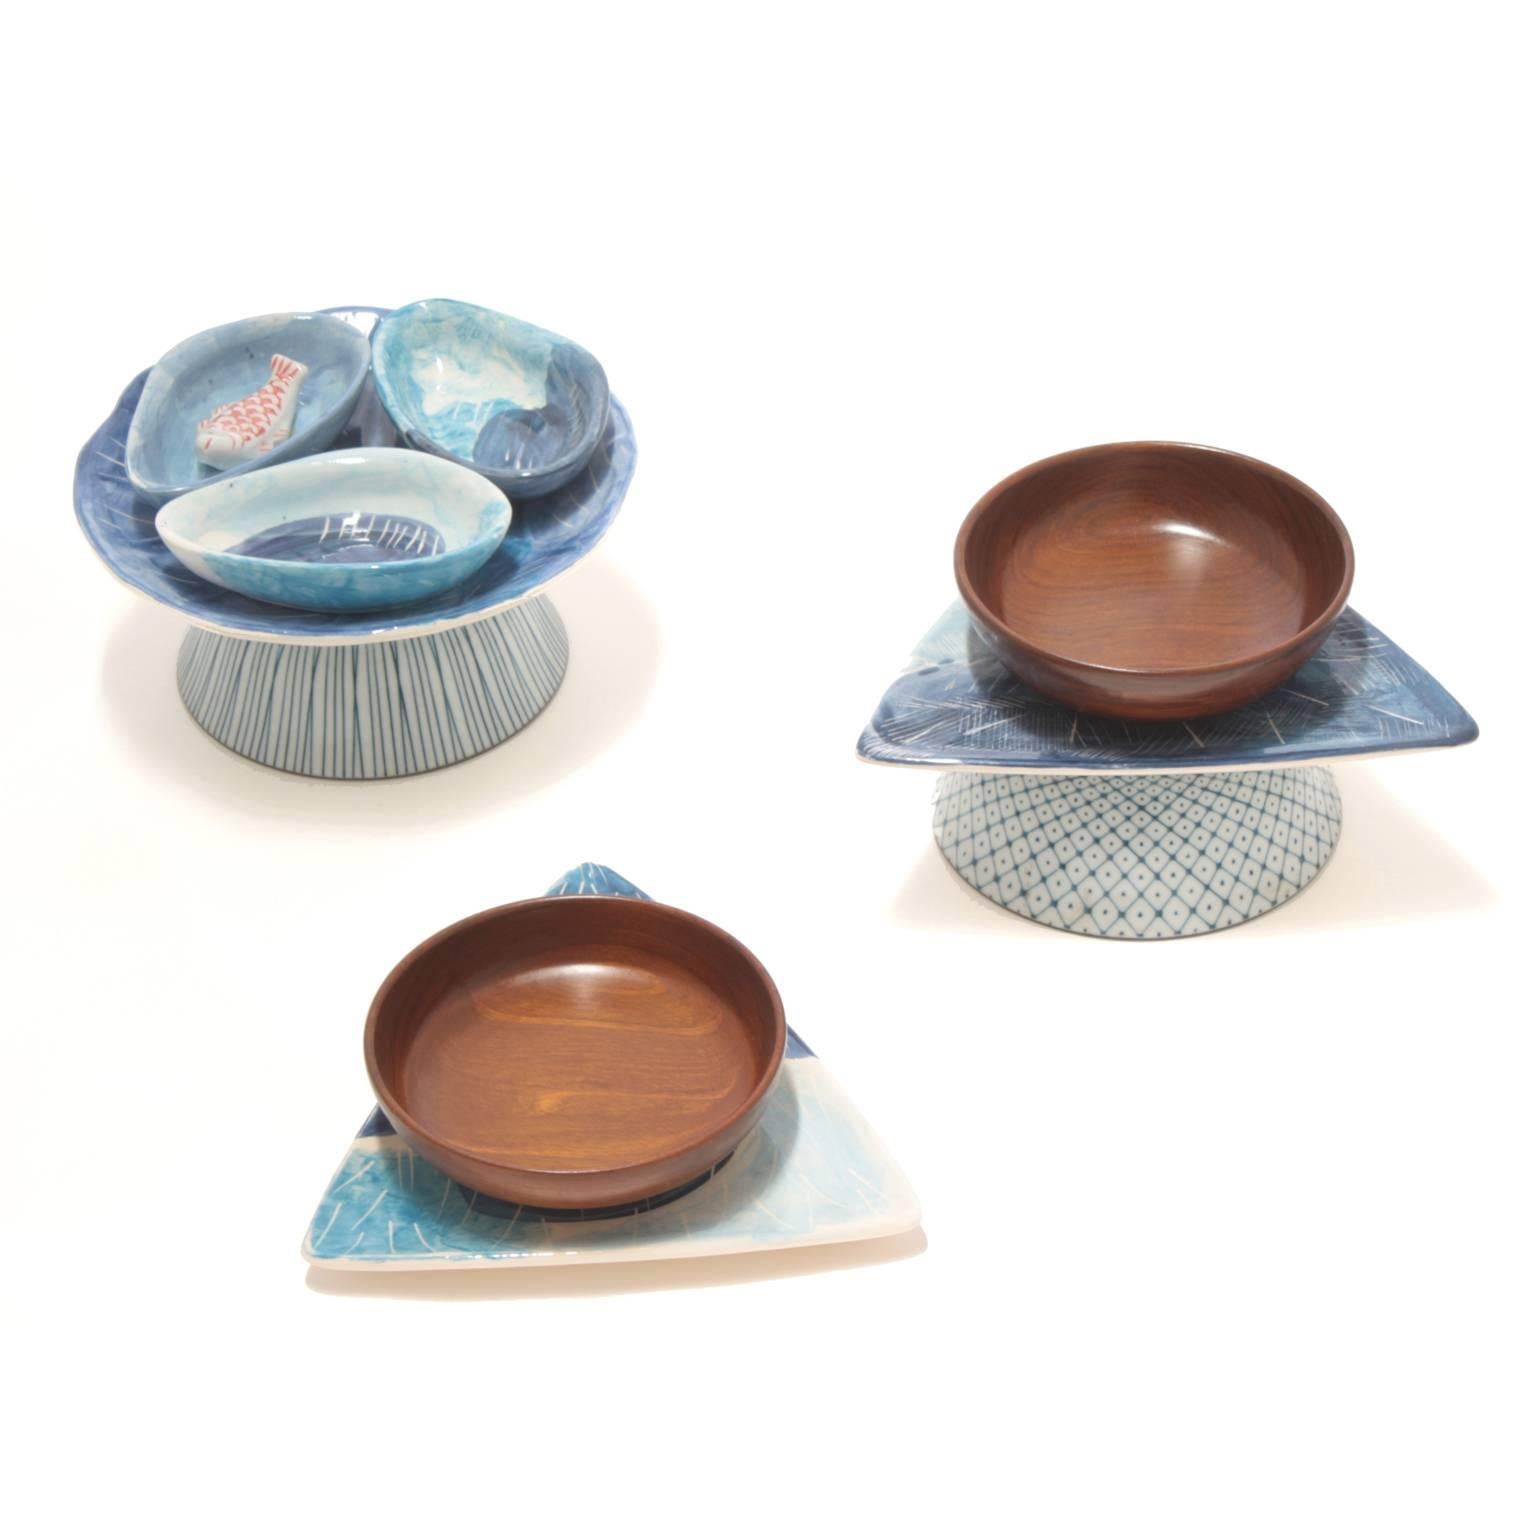 Set of three appetizer ceramic bowls, Brazil, 2014

Brazilian contemporary design by Rodrigo Almeida

Measurement Units Centimeters
22cm D x 9.5cm H
21.5cm x 21cm x 6cm H
21.5cm x 21cm x 12.5cm H

With the outlook of an anthropologist, this